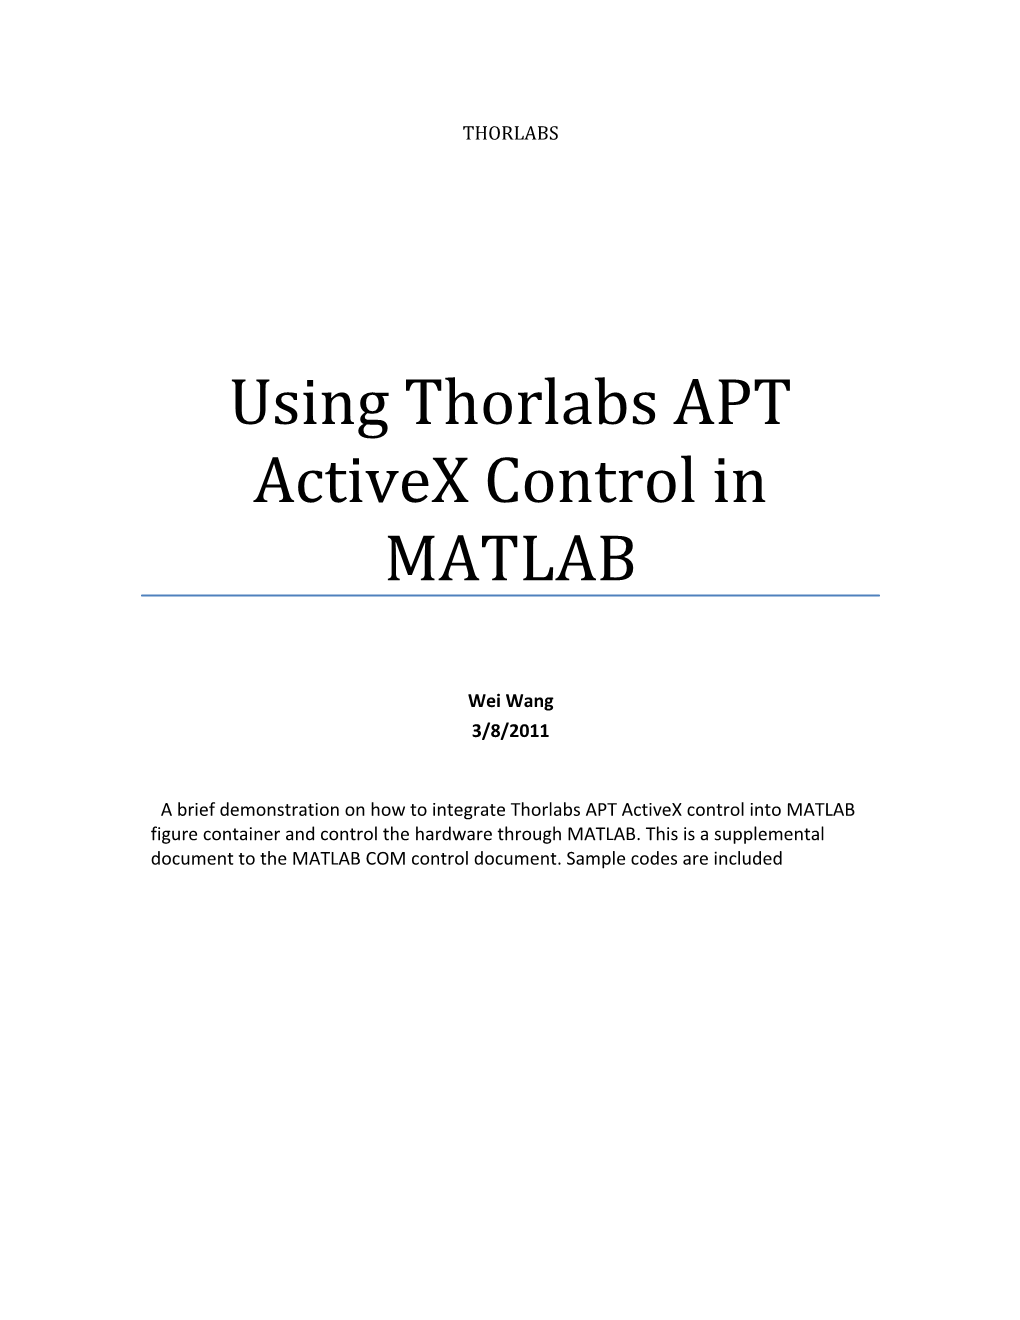 Using Thorlabs APT Activex Control in MATLAB